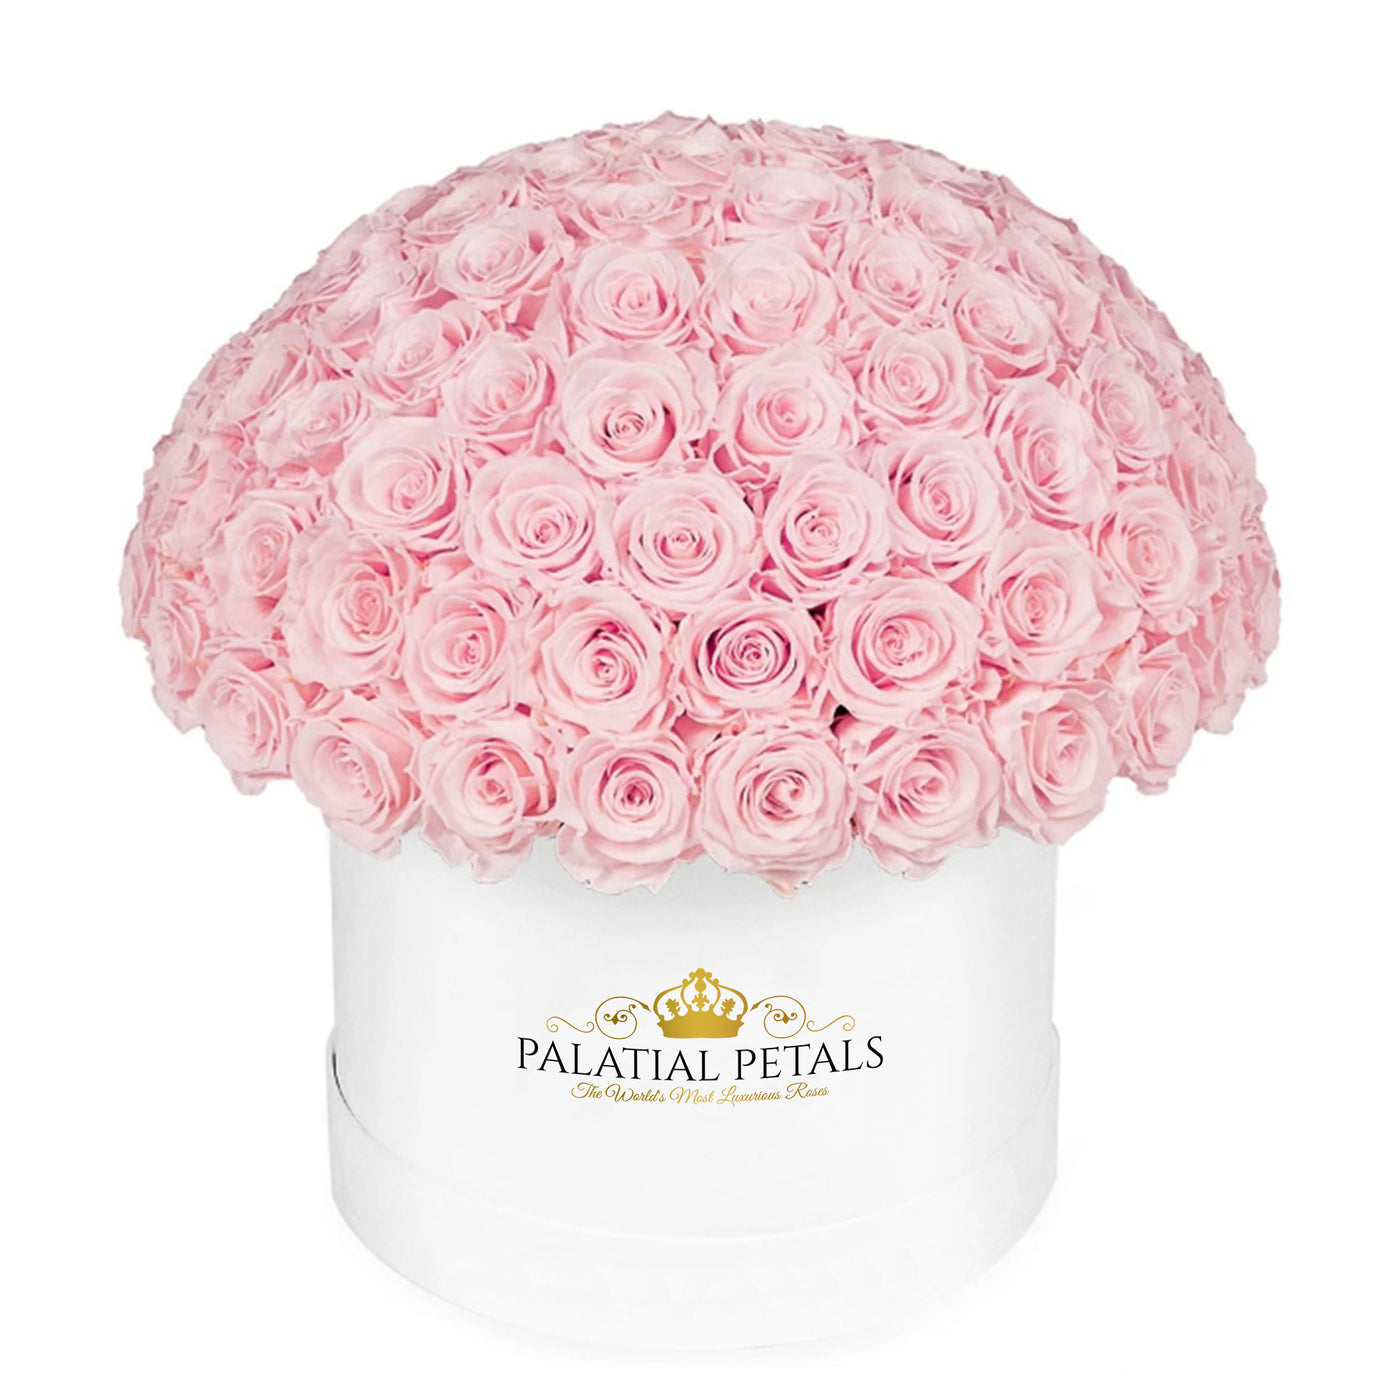 Blush Roses That Last A Year - Grande "Crown" Rose Box